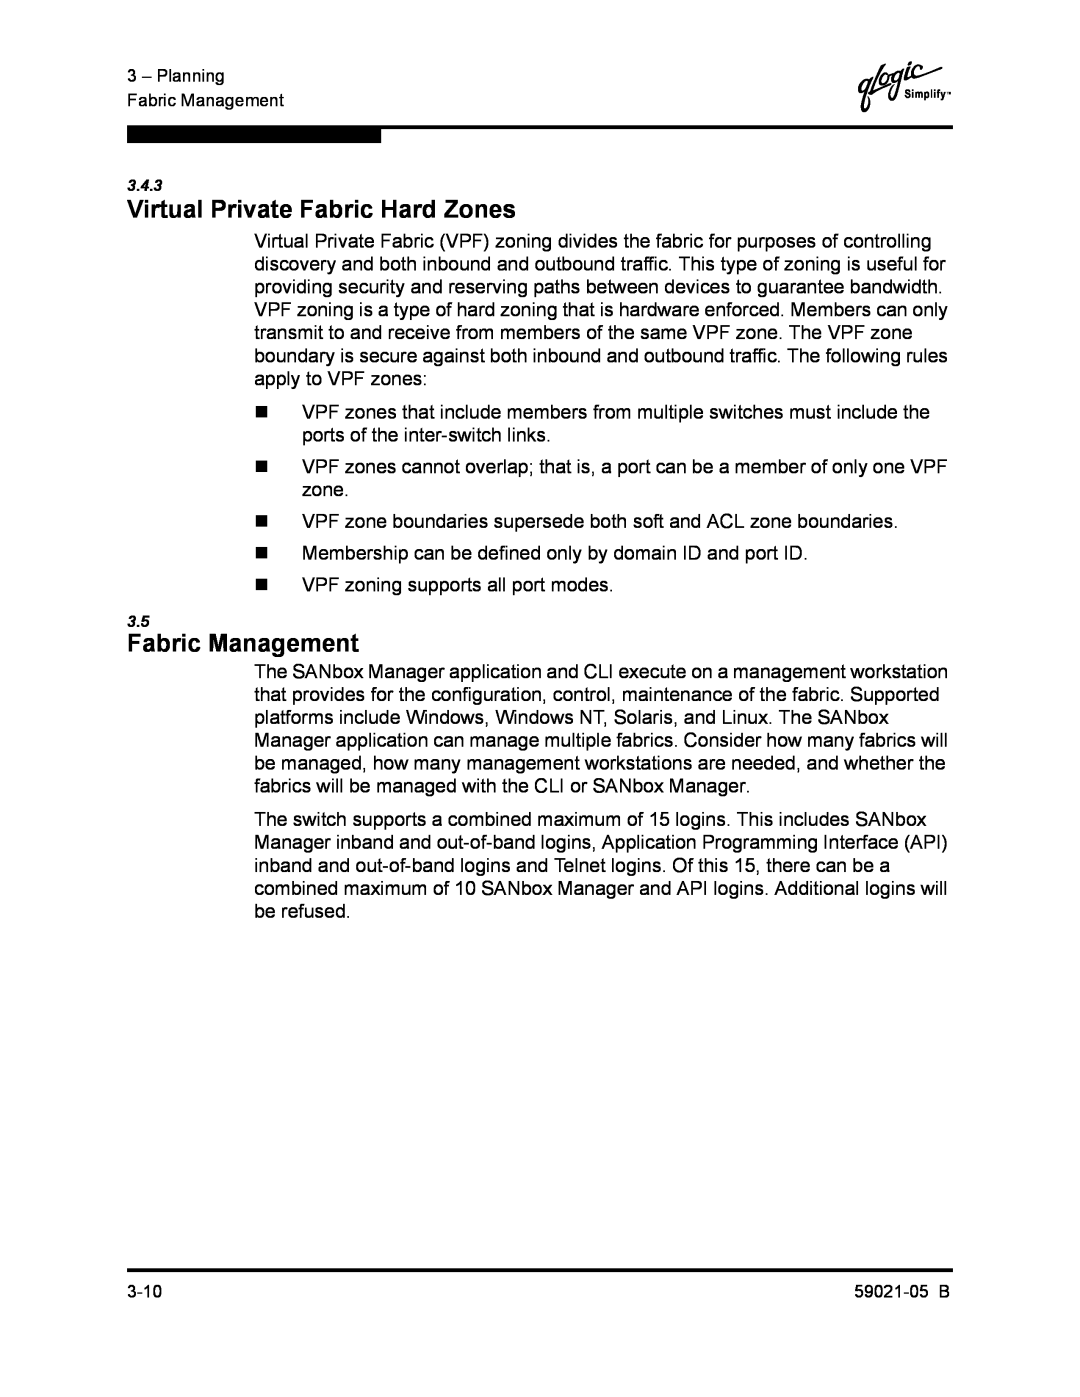 Q-Logic 59021-05 B manual Virtual Private Fabric Hard Zones, Fabric Management 